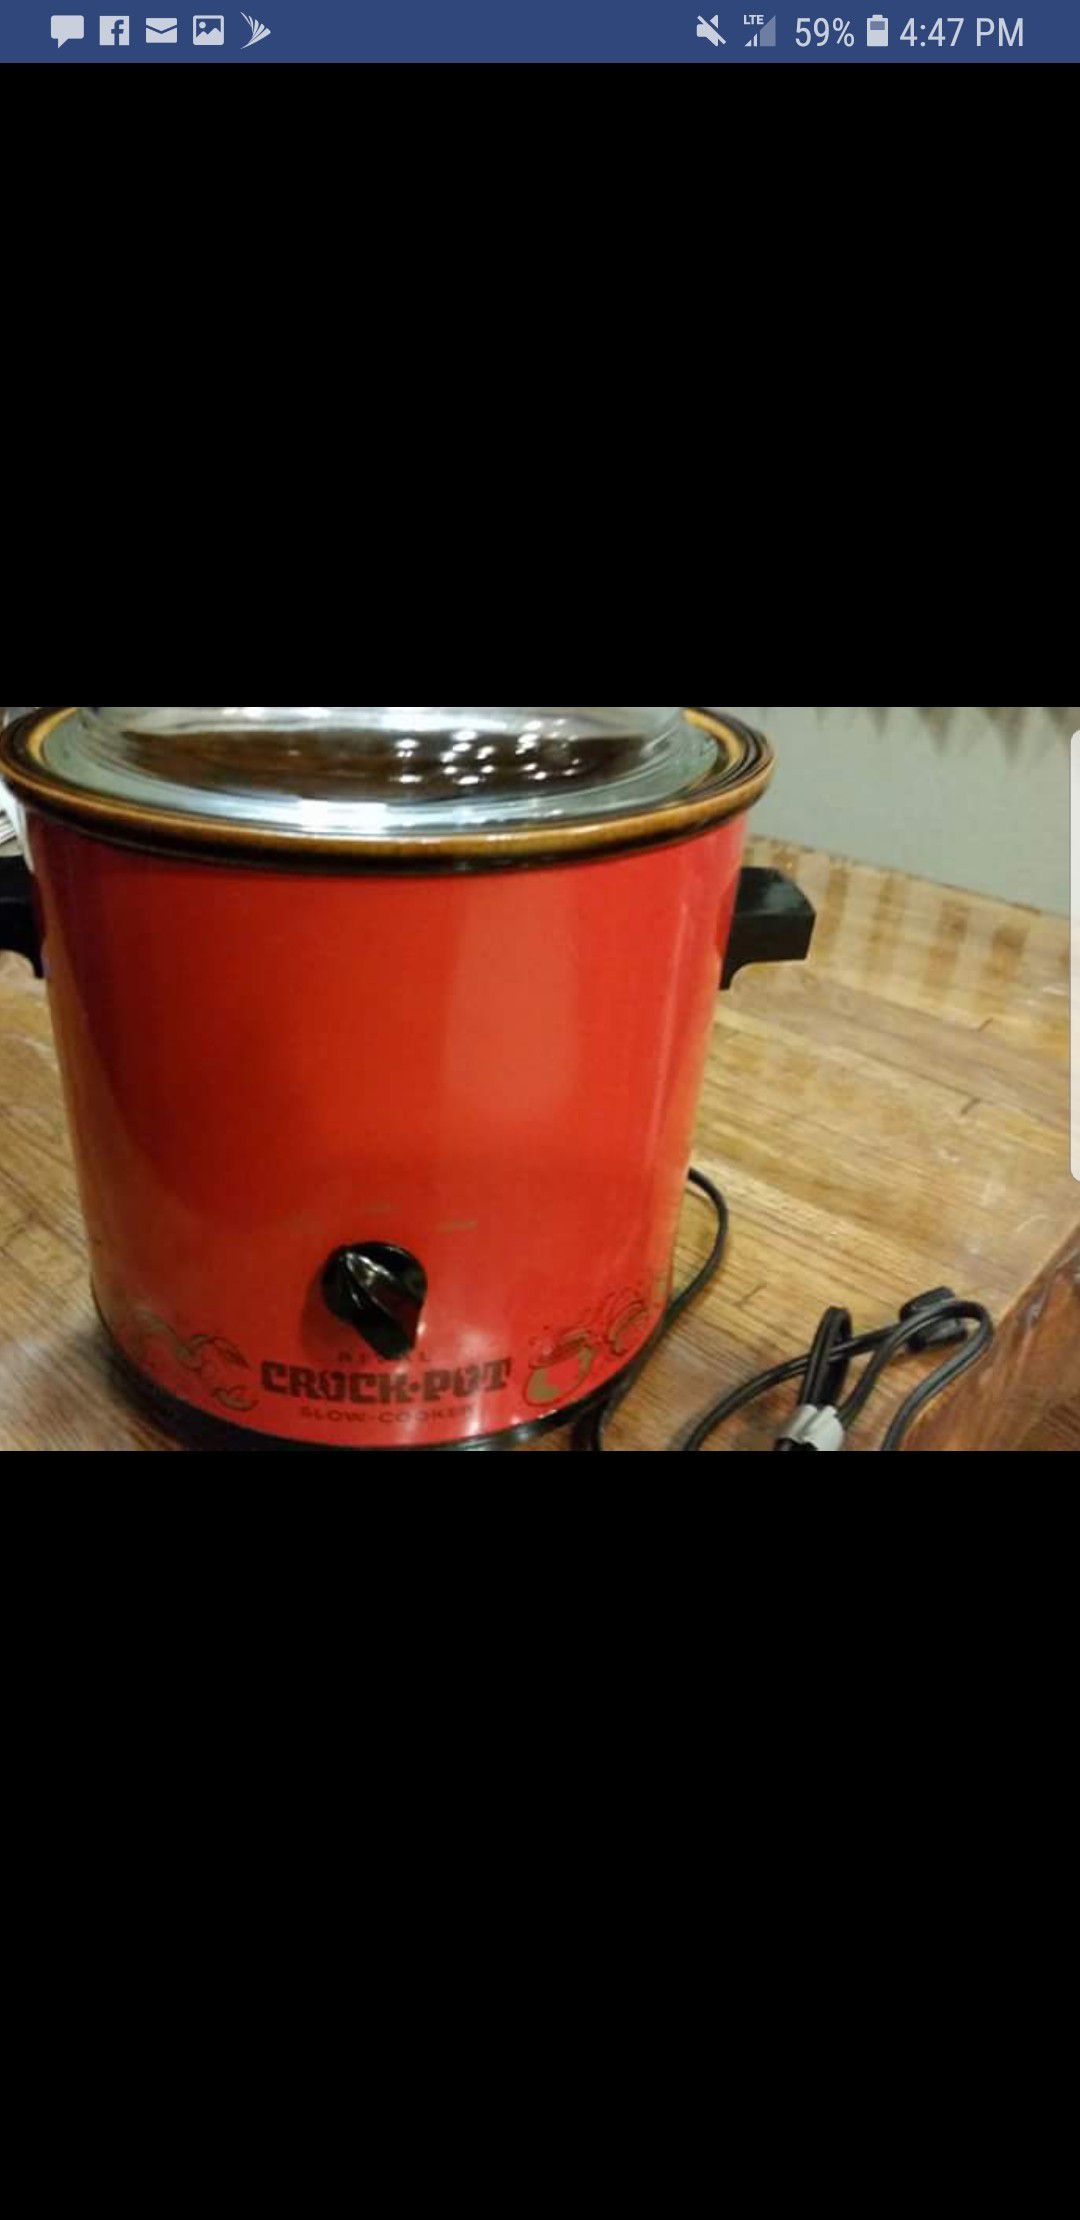 Crock pot vintage